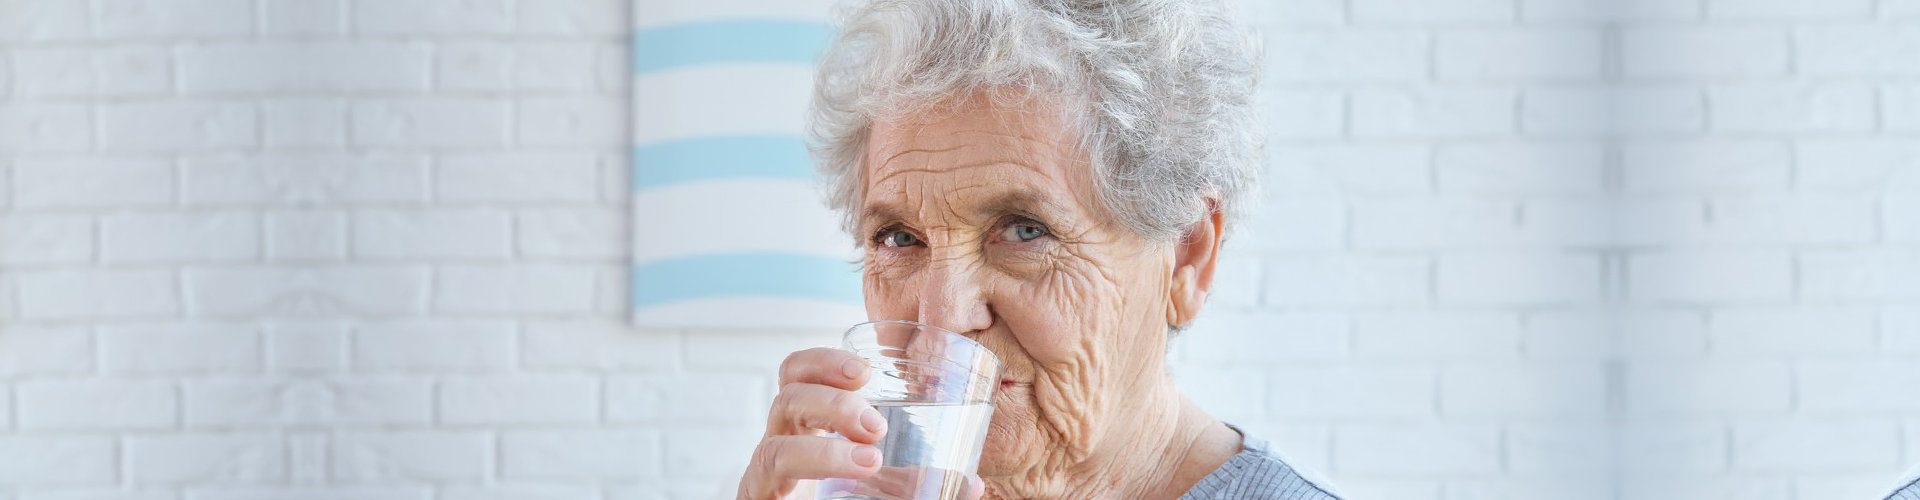 elderly woman drinking